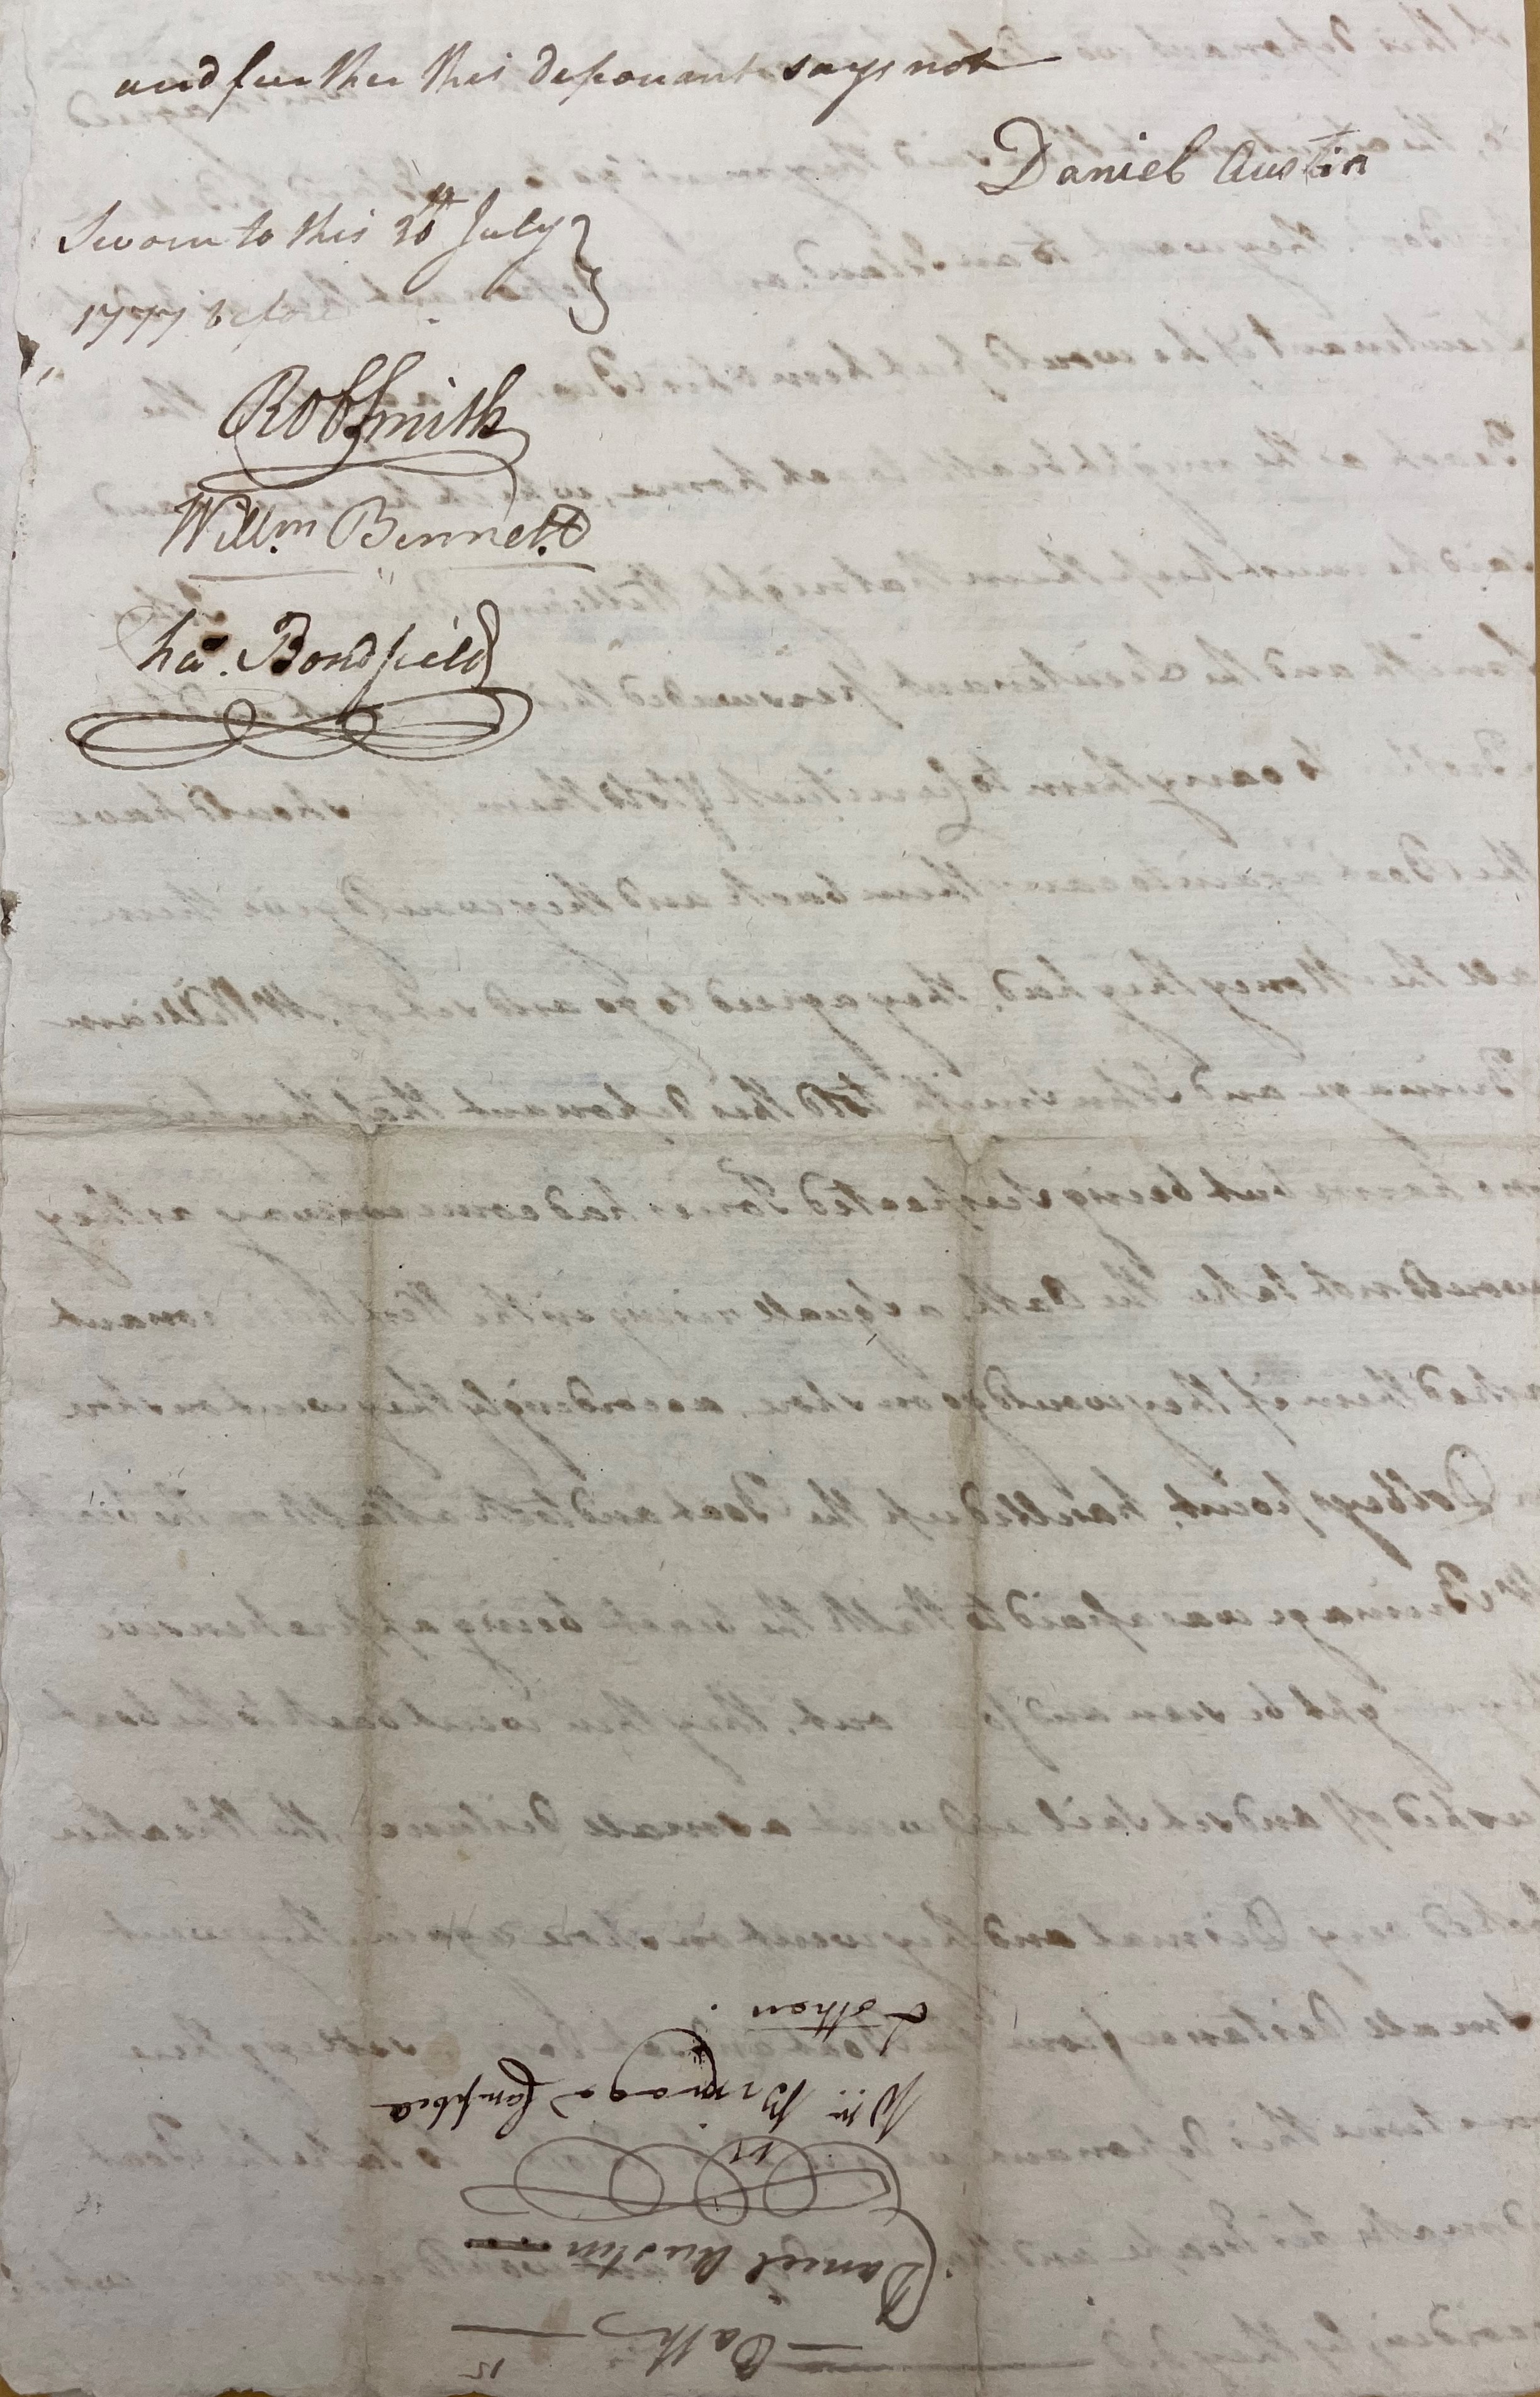 Deposition of Daniel Austin, 30 July 1777, page 4